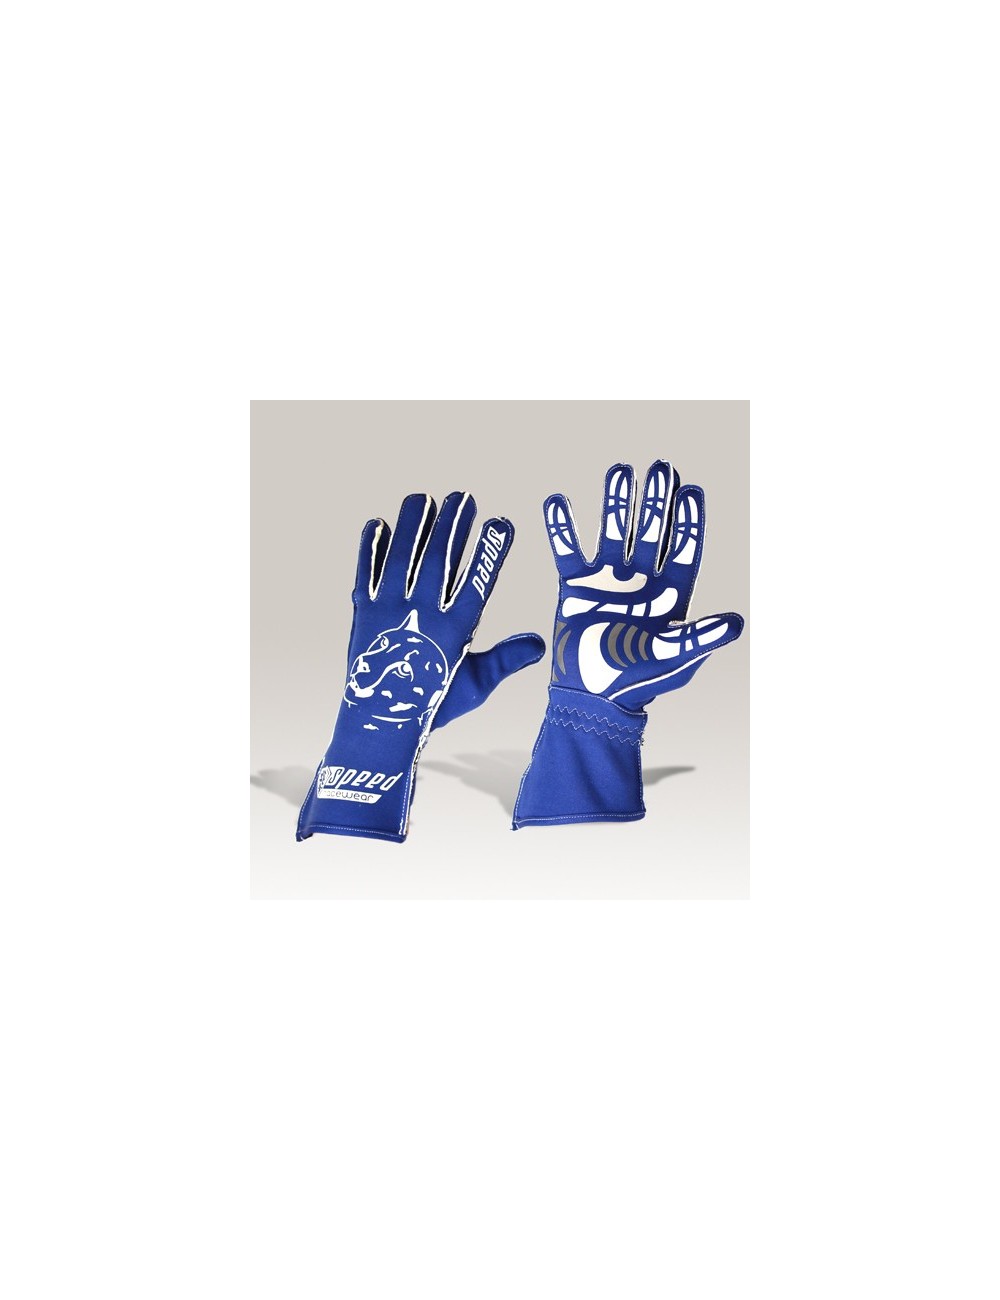 Speed gants Melbourne G-2  bleu-blanc